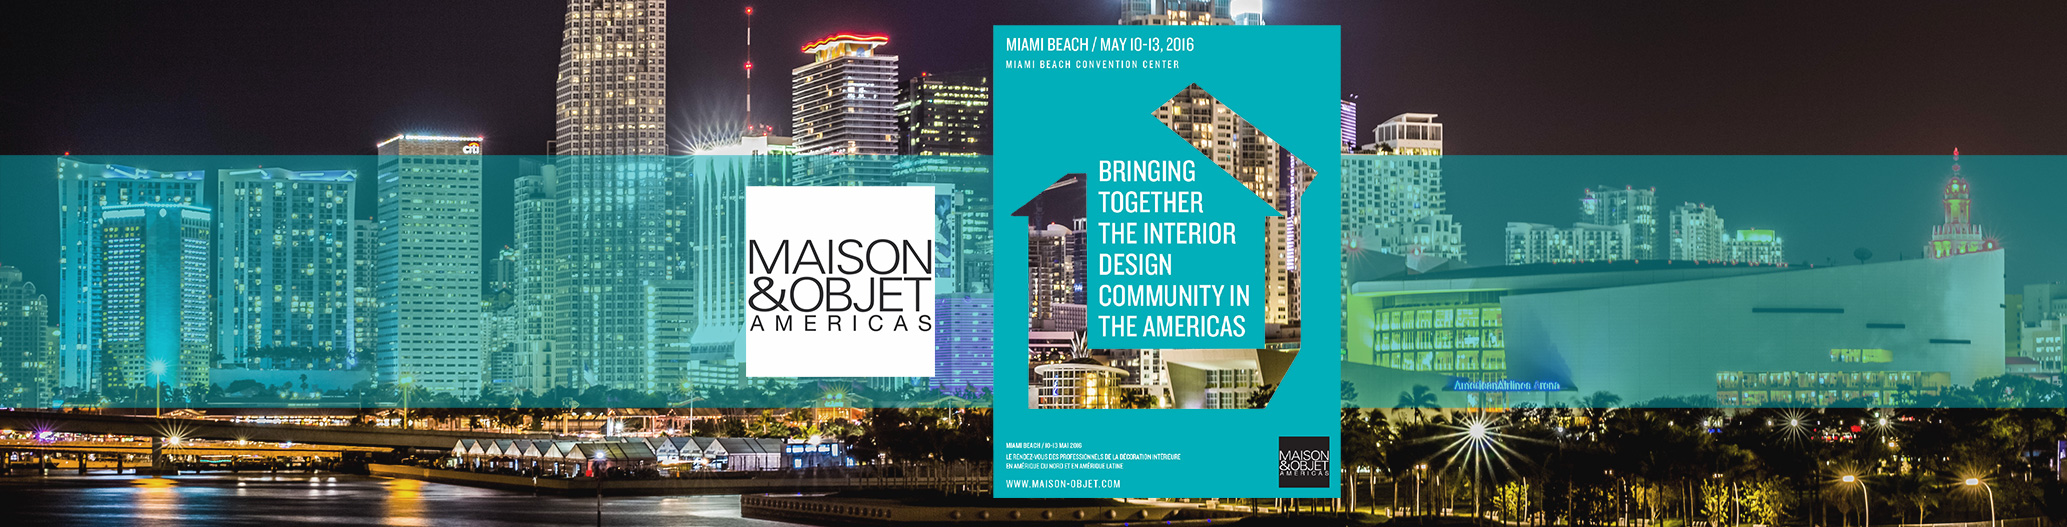 Maison & Objet Americas 2016